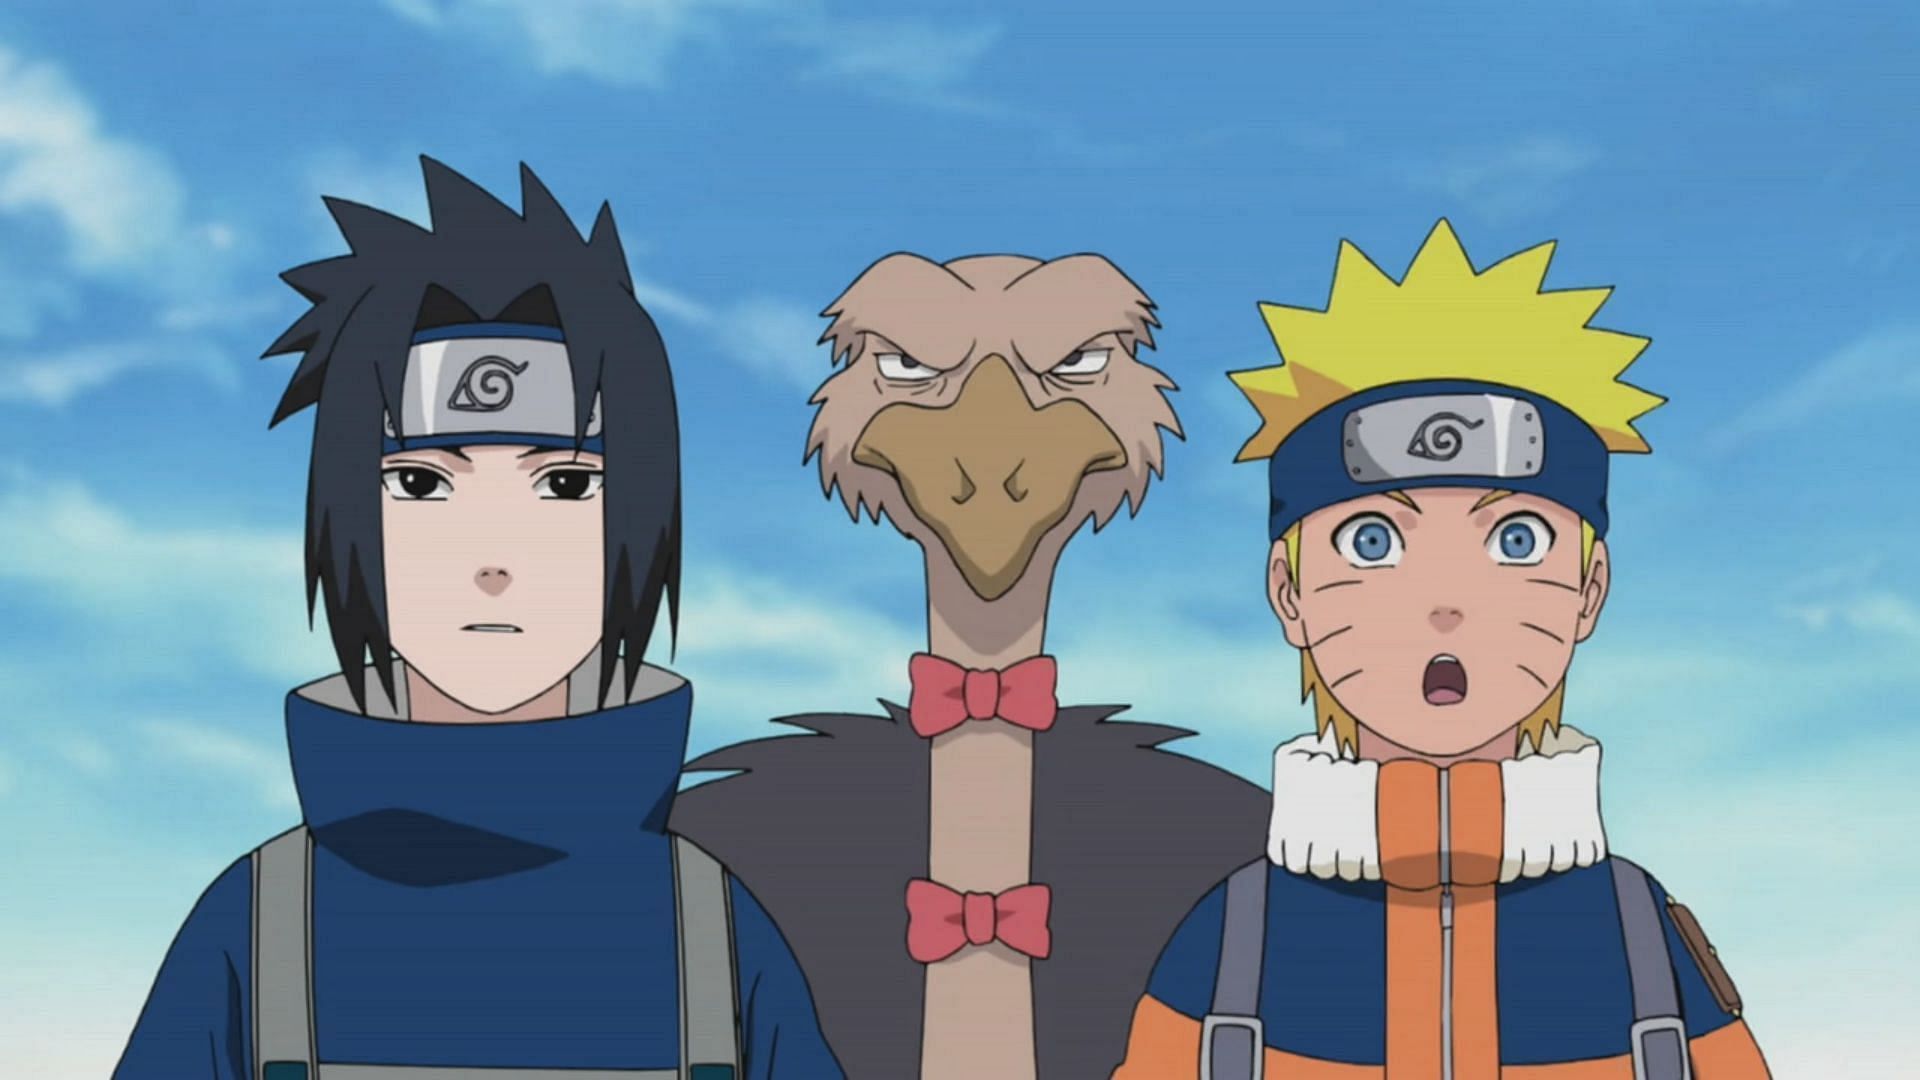 Sasuke Uchiha and Naruto Uzumaki (Image via Studio Pierrot)